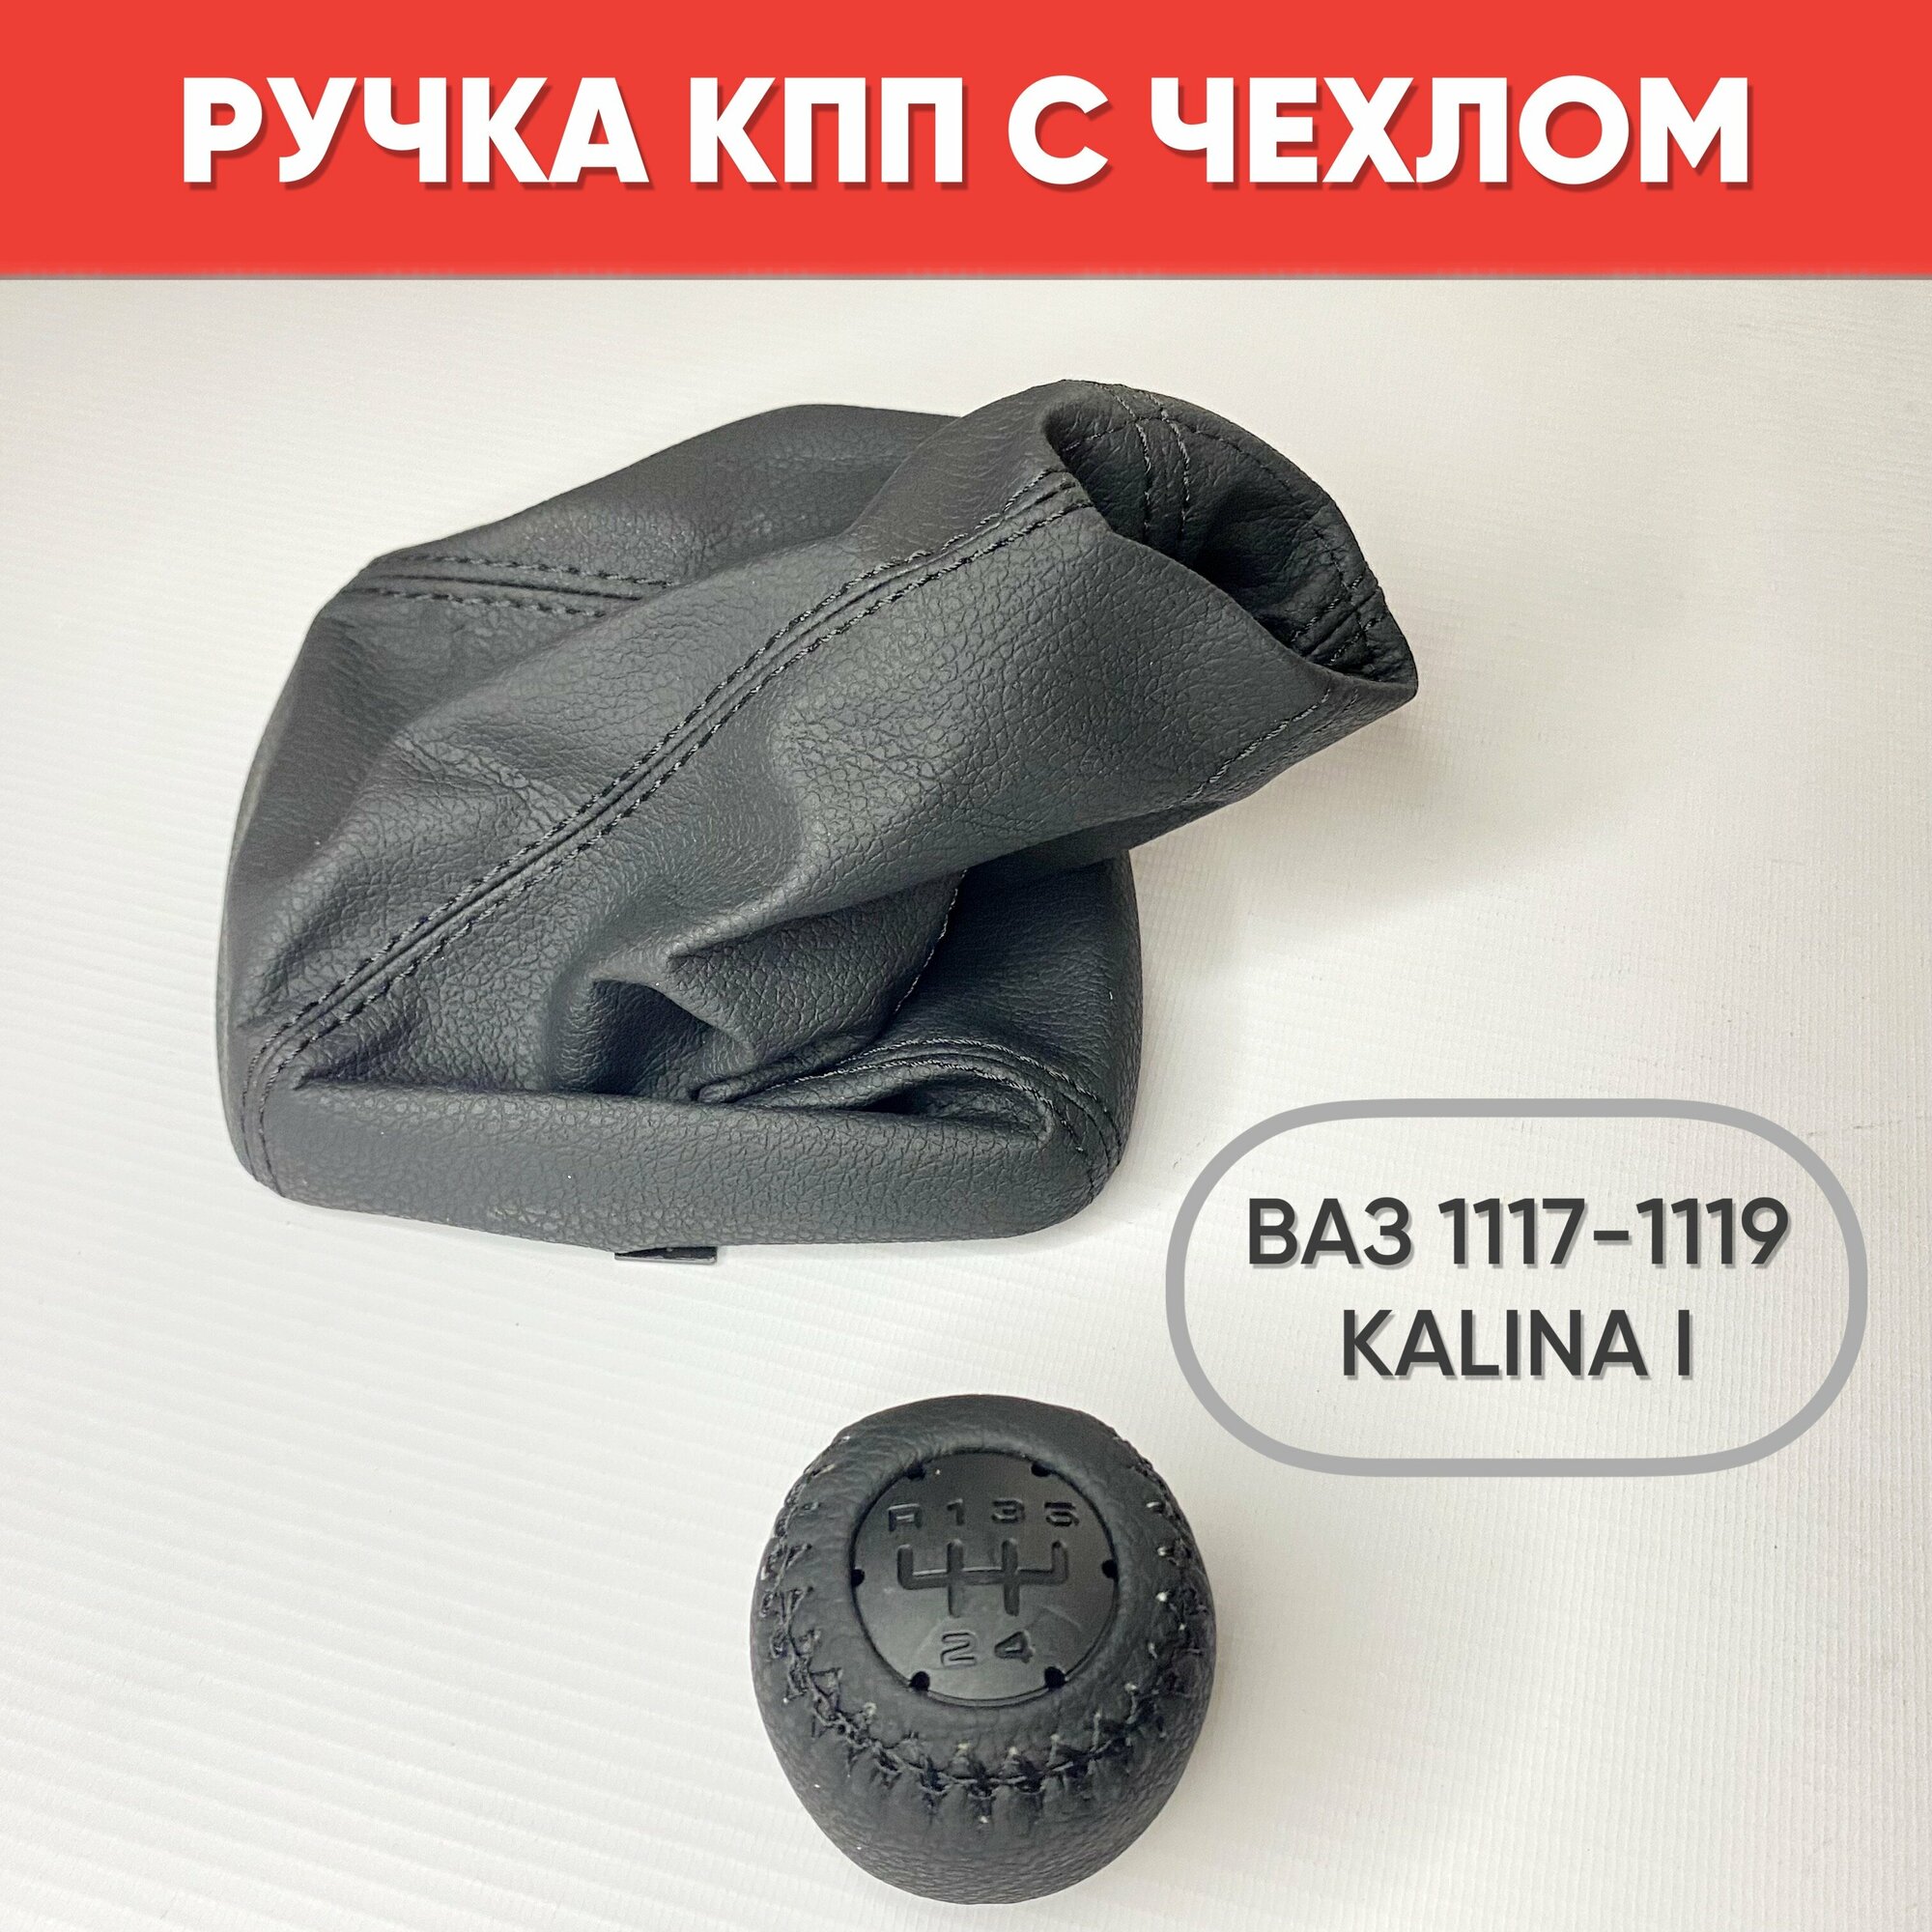 Ручка КПП экокожа Люкс на ВАЗ 1117 – 1119 Lada Kalina, черная / Ручка КПП с кожухом для Лада Калина